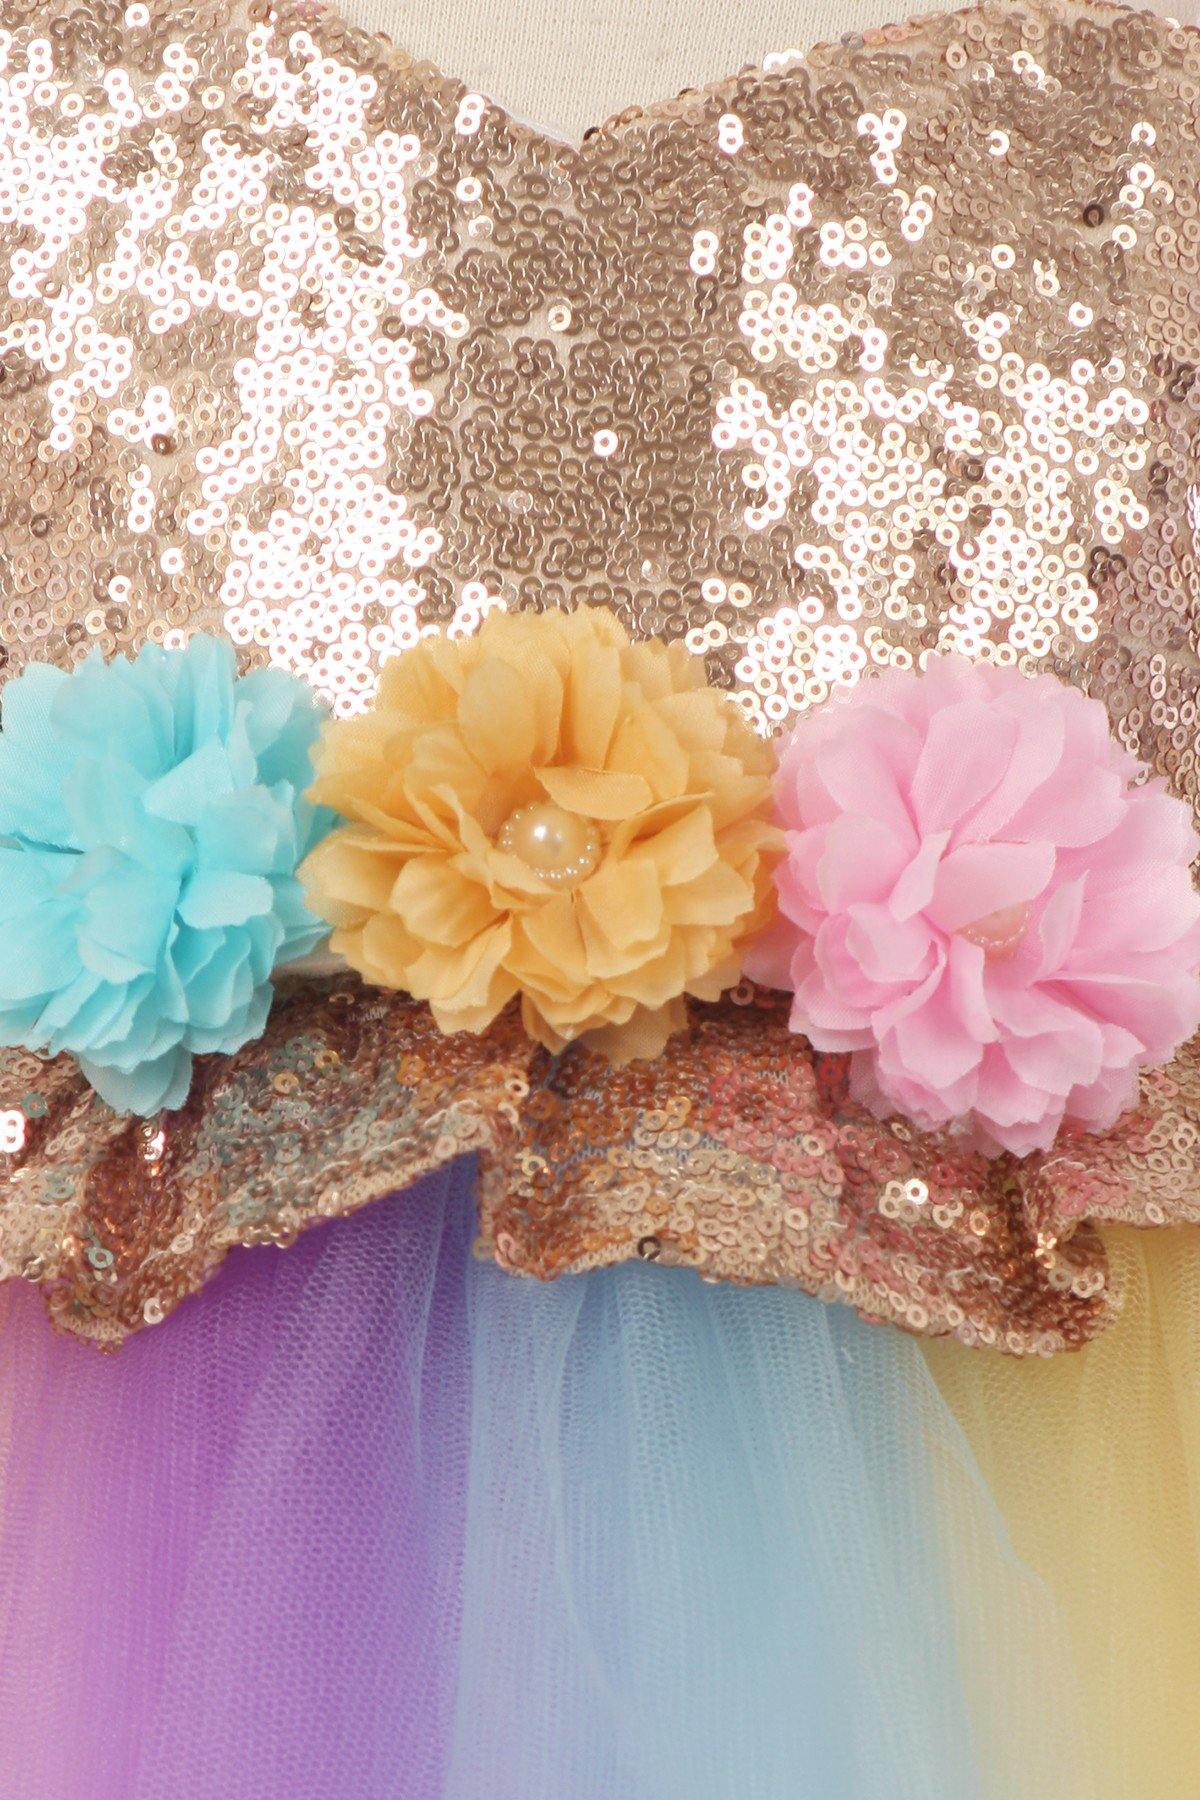 Flower Girls Dress Up Unicorn Tutu - The Dress Outlet Cinderella Couture